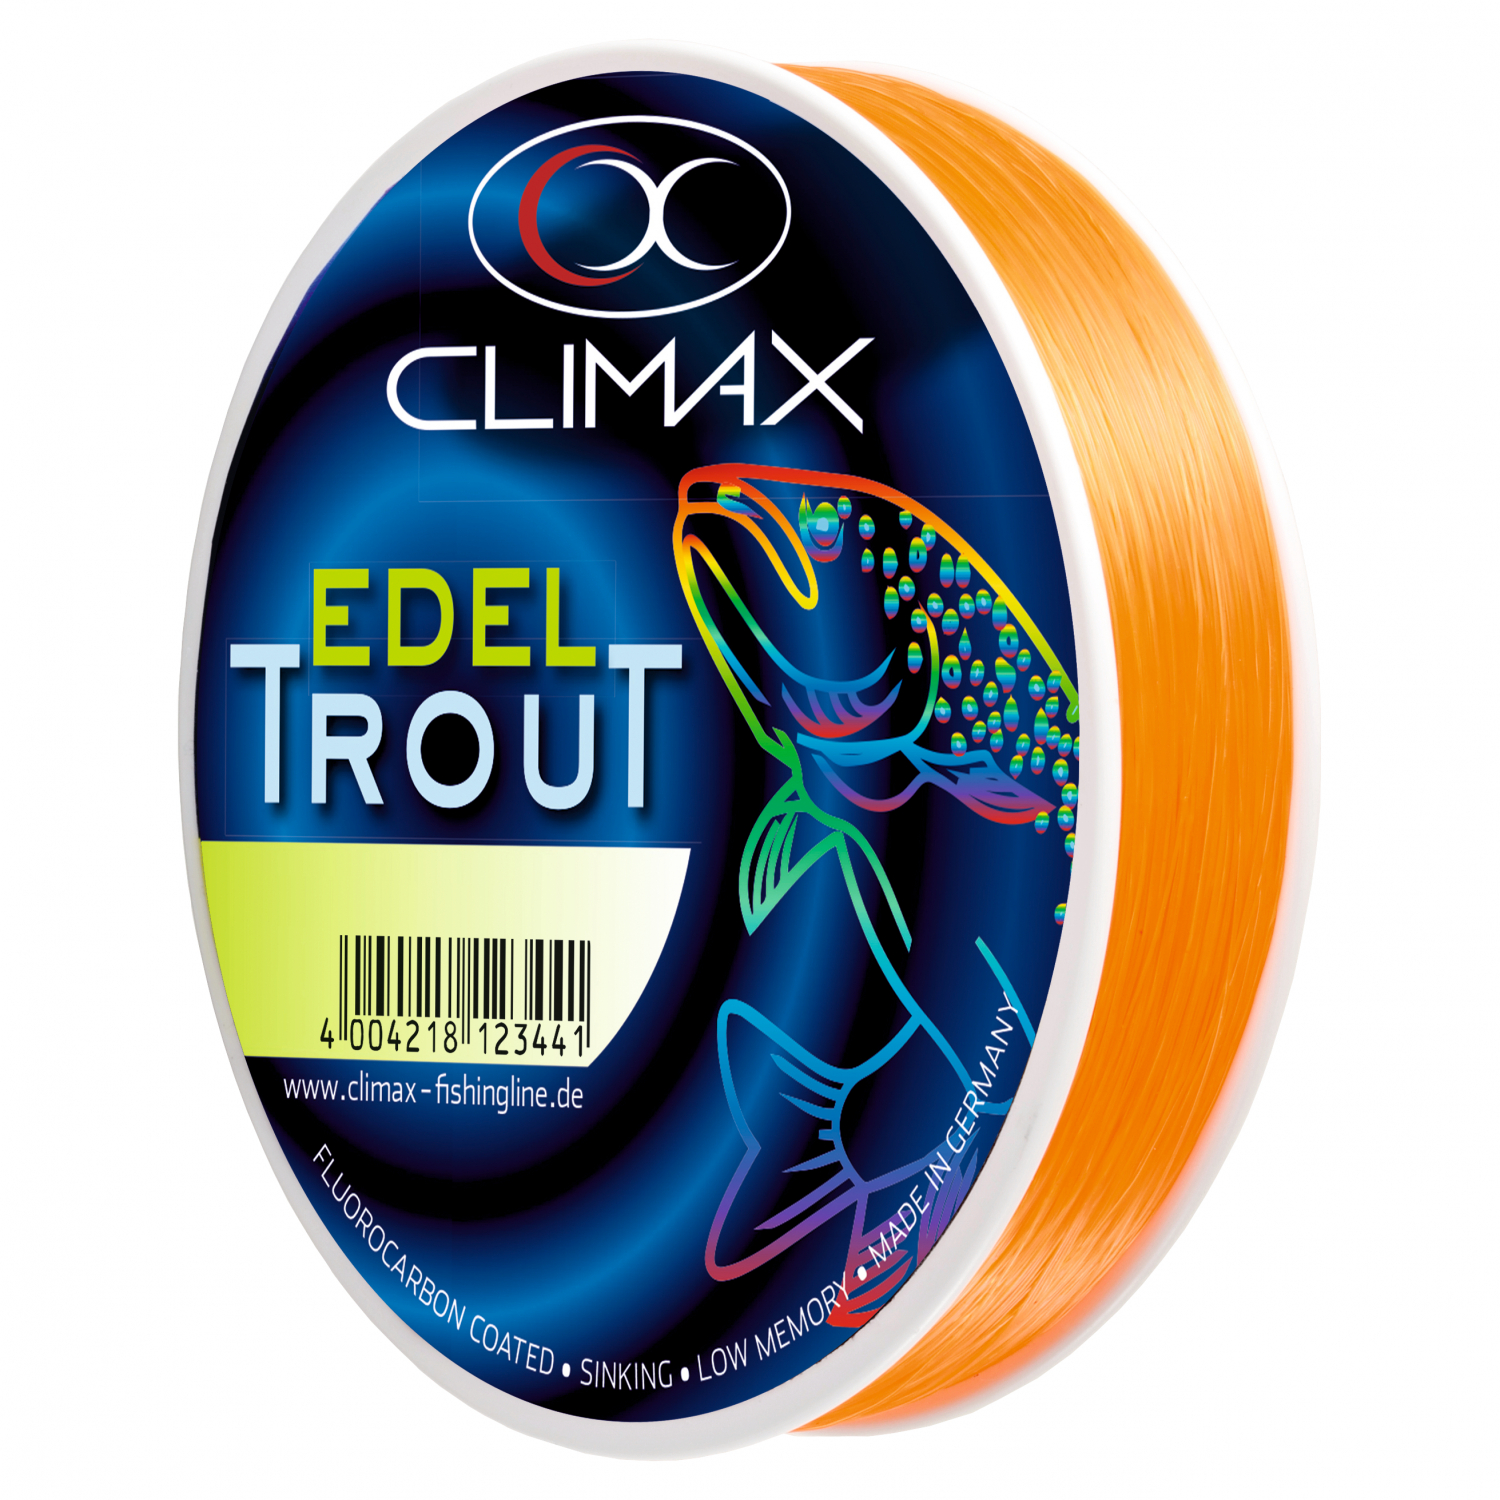 Climax Climax Edel-Trout Fishing Line (orange, 300 m) 